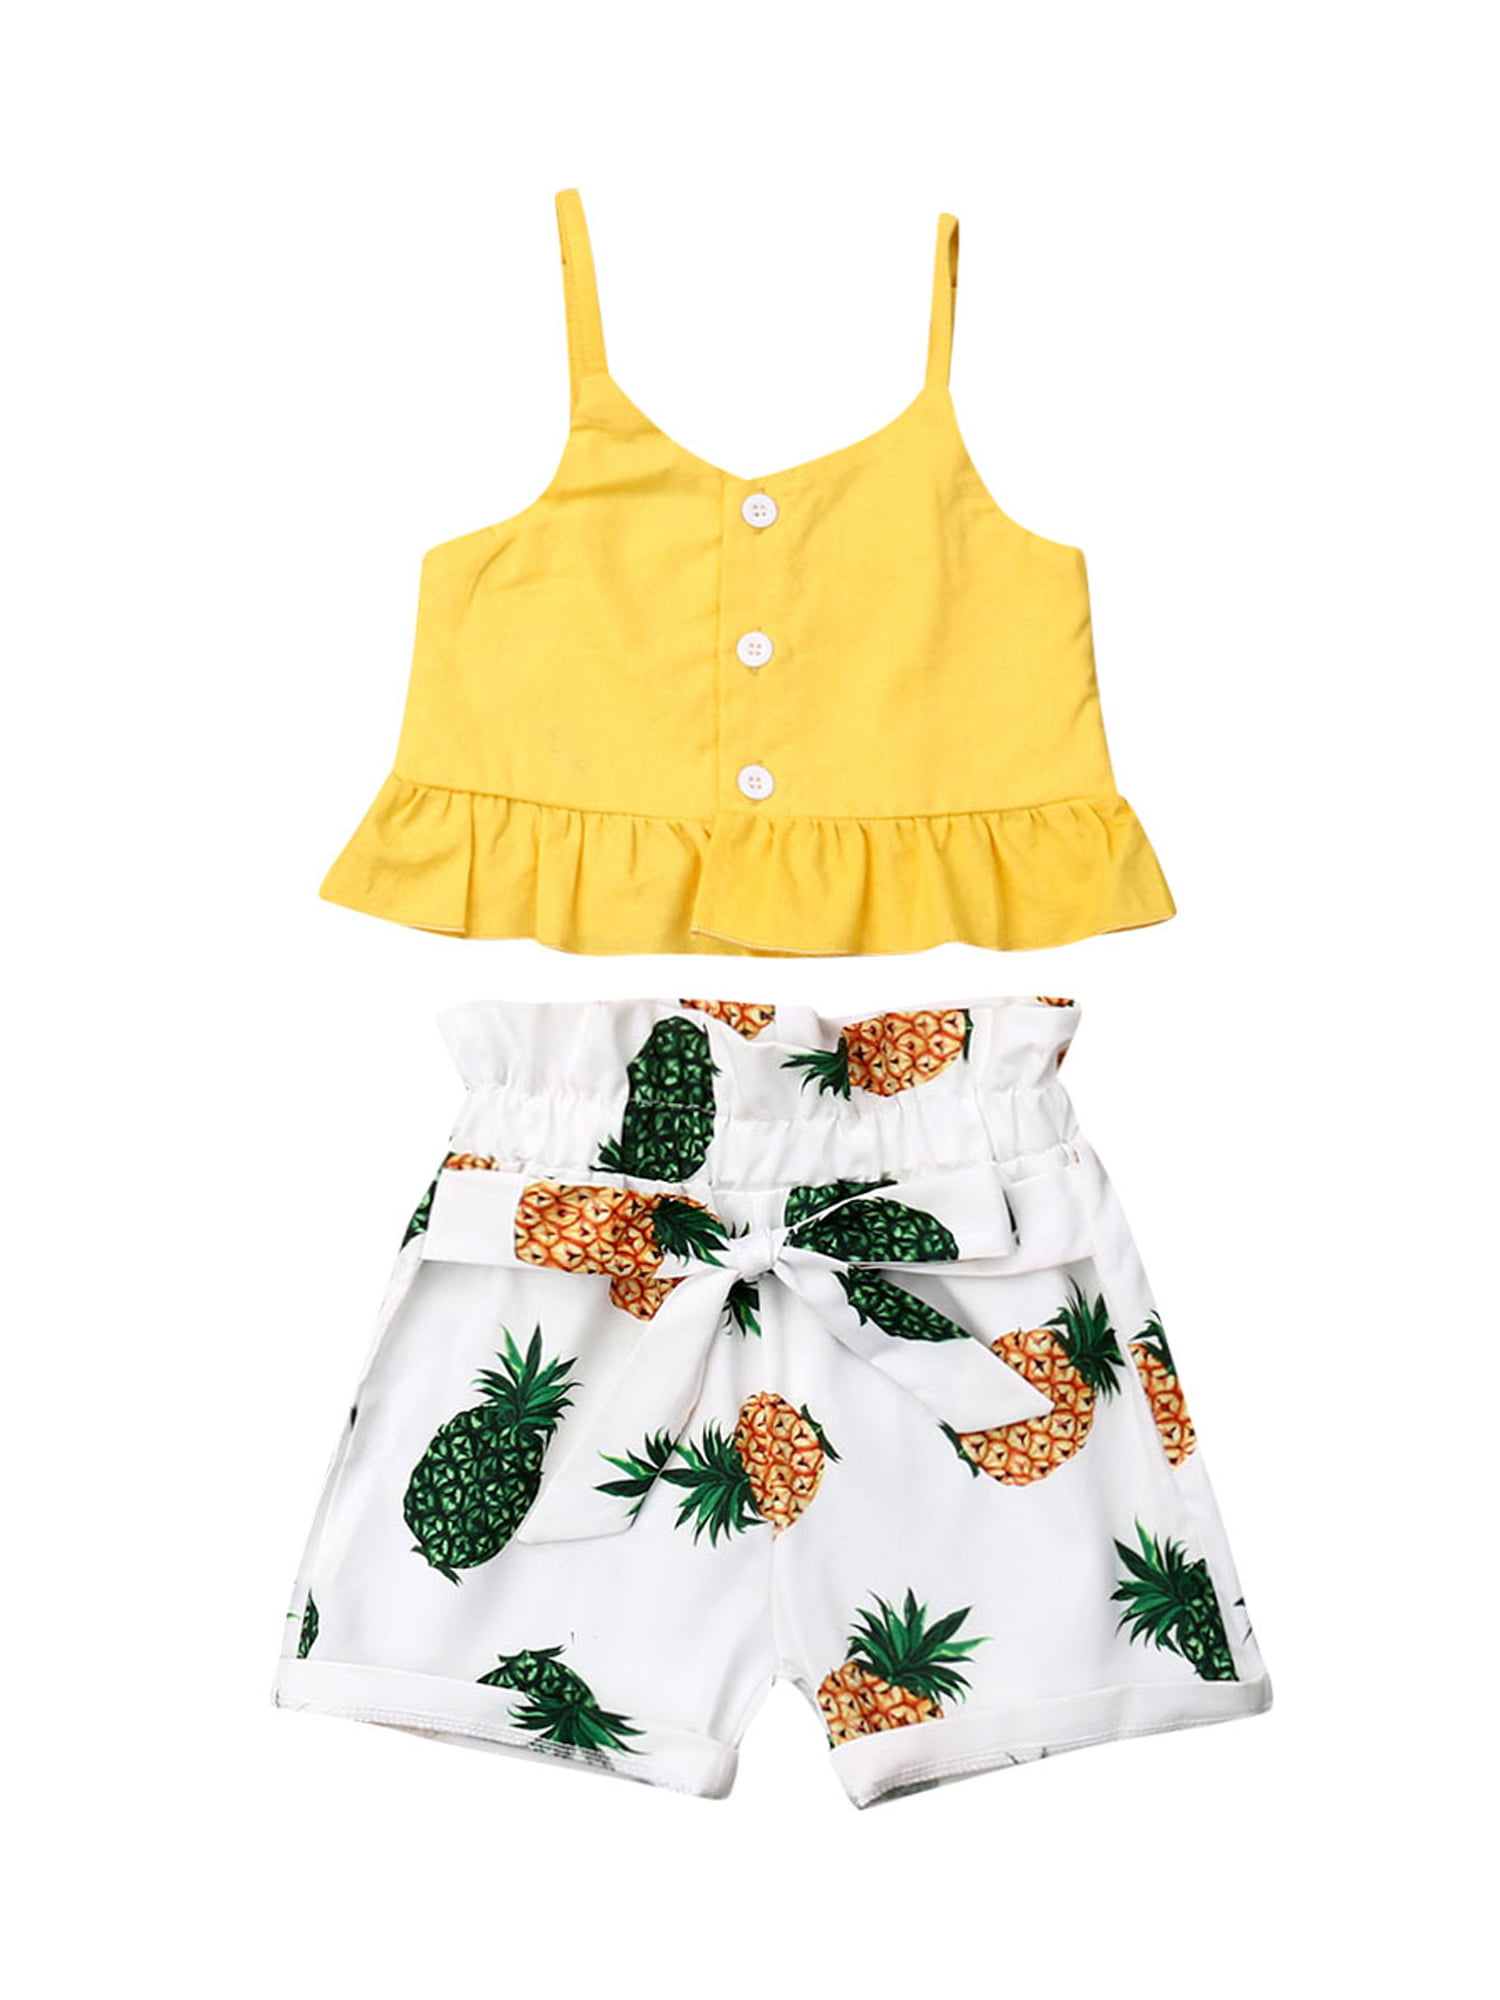 Toddler Girls Summer Short Set Halter Ruffle Top+Tassel Pineapple Pants Summer Clothes Outfit 